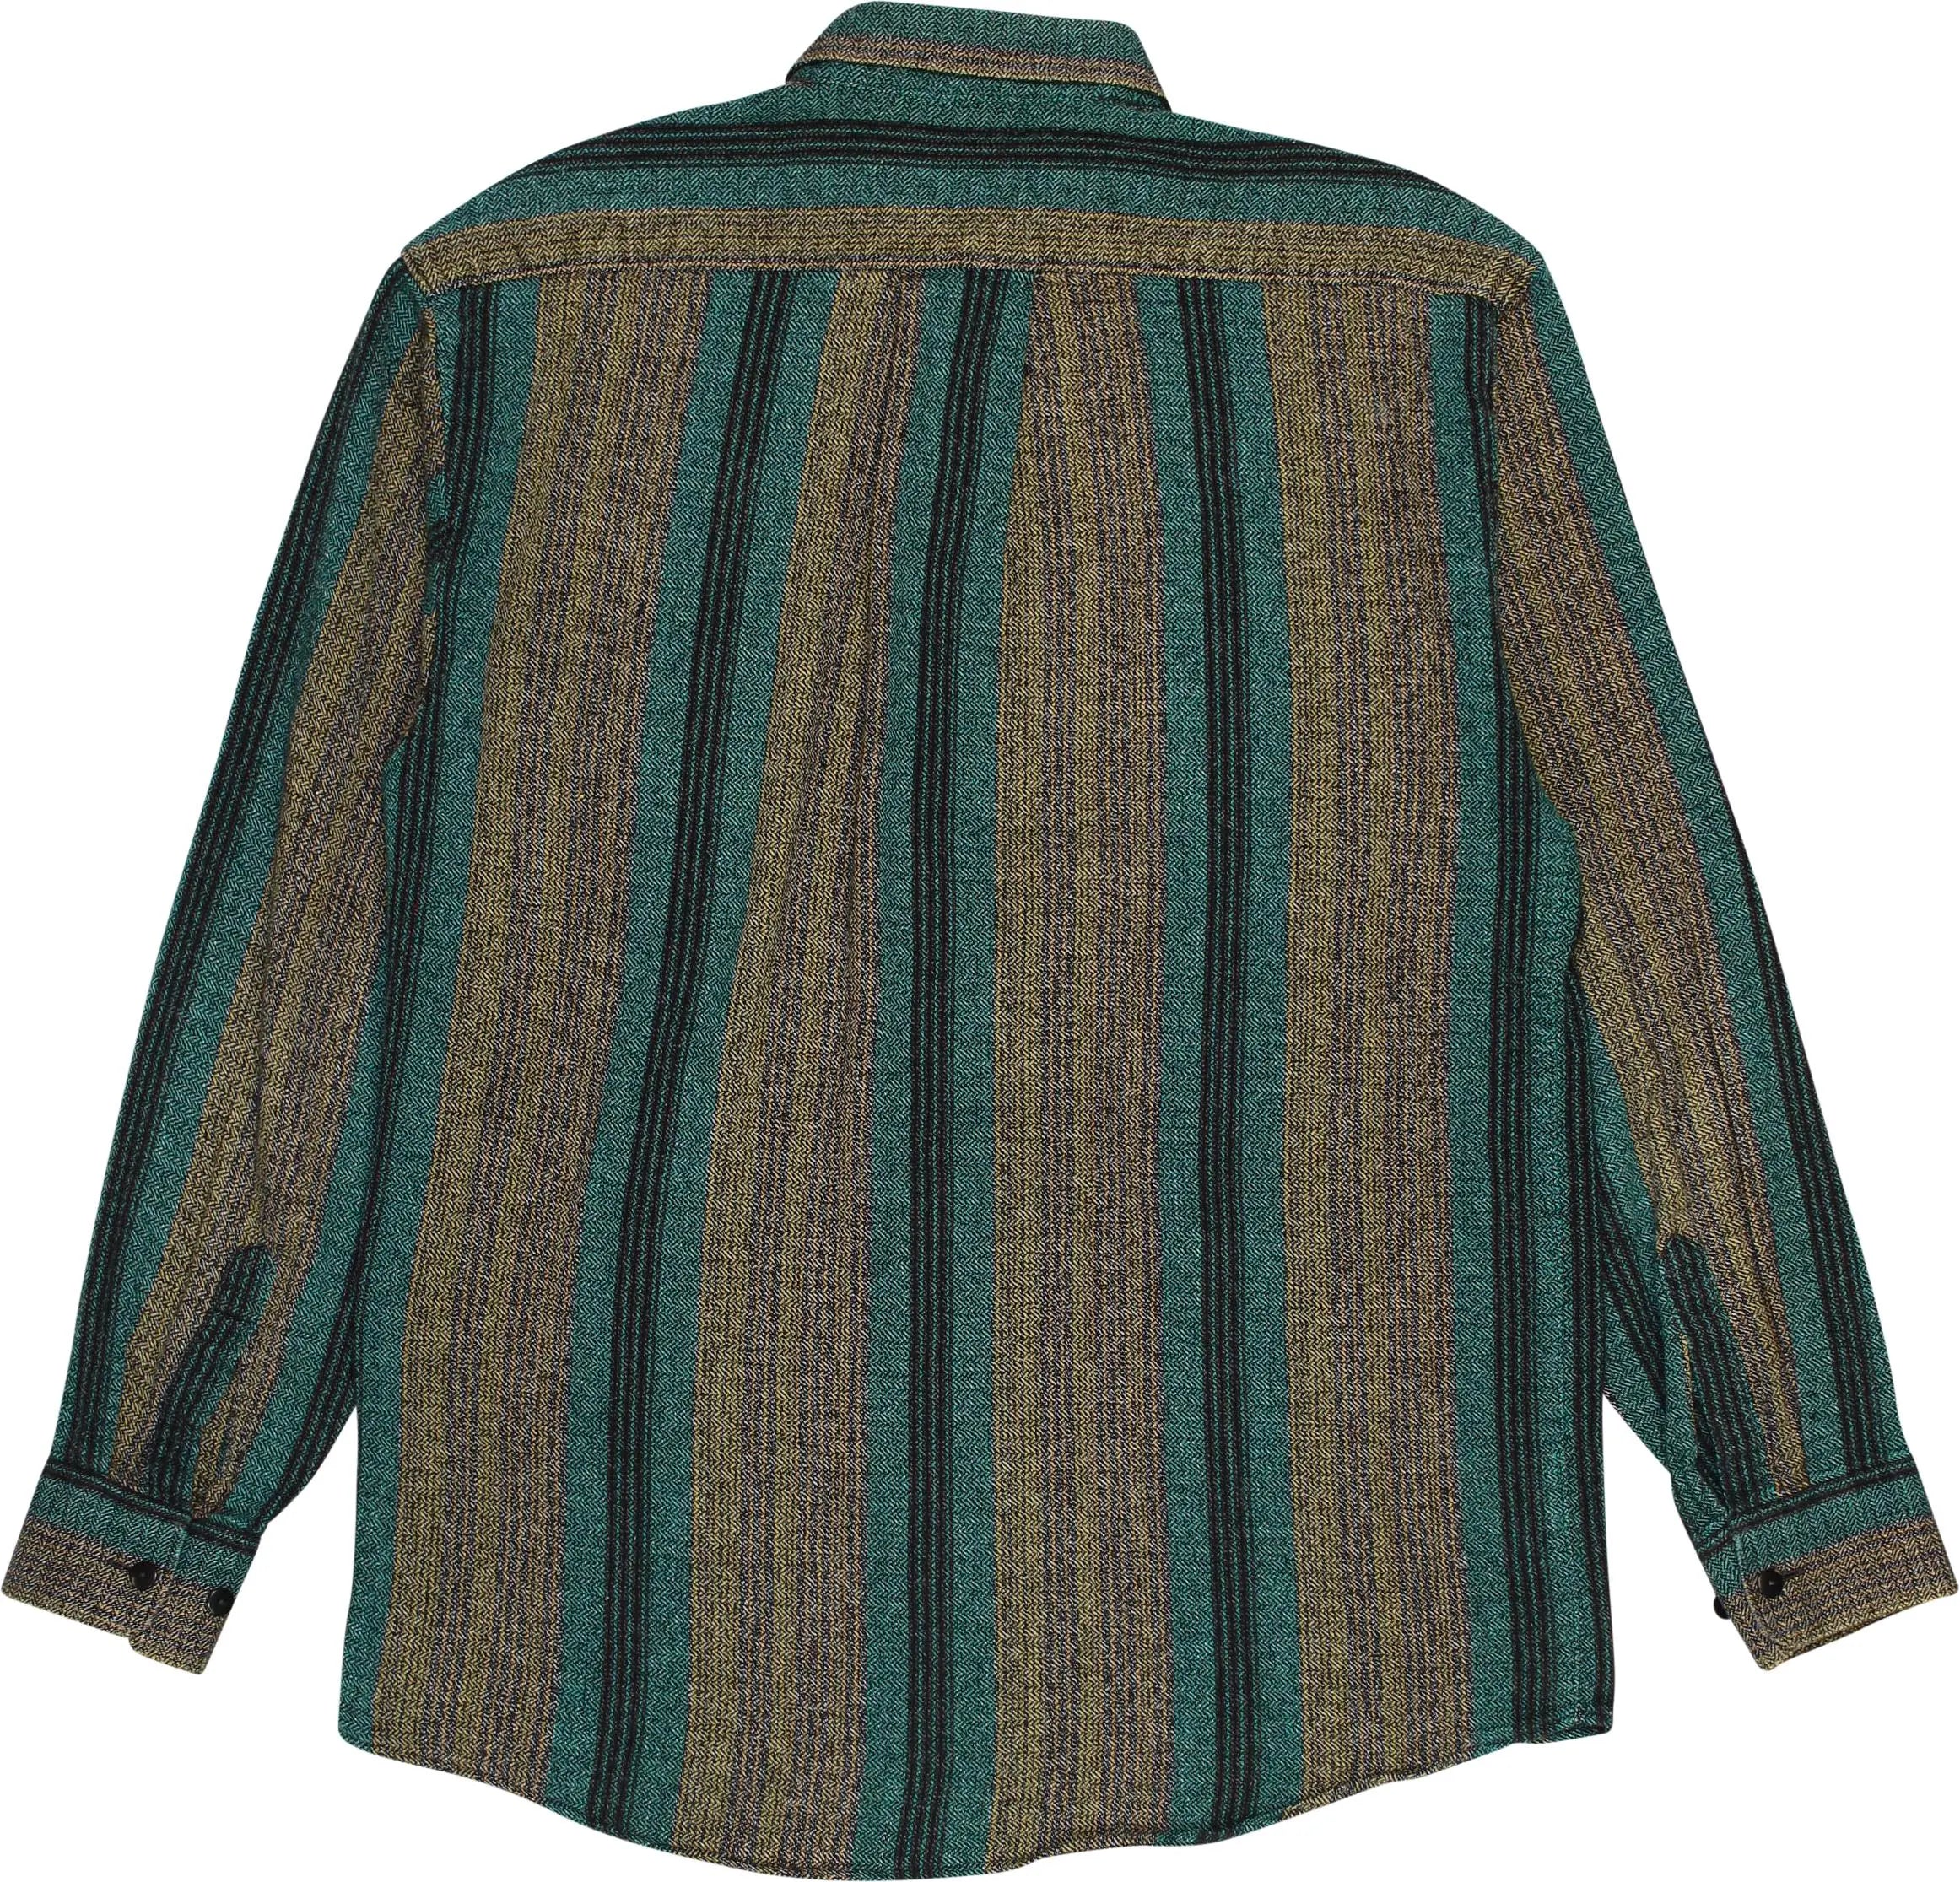 Dornbusch - Vintage Striped Shirt- ThriftTale.com - Vintage and second handclothing